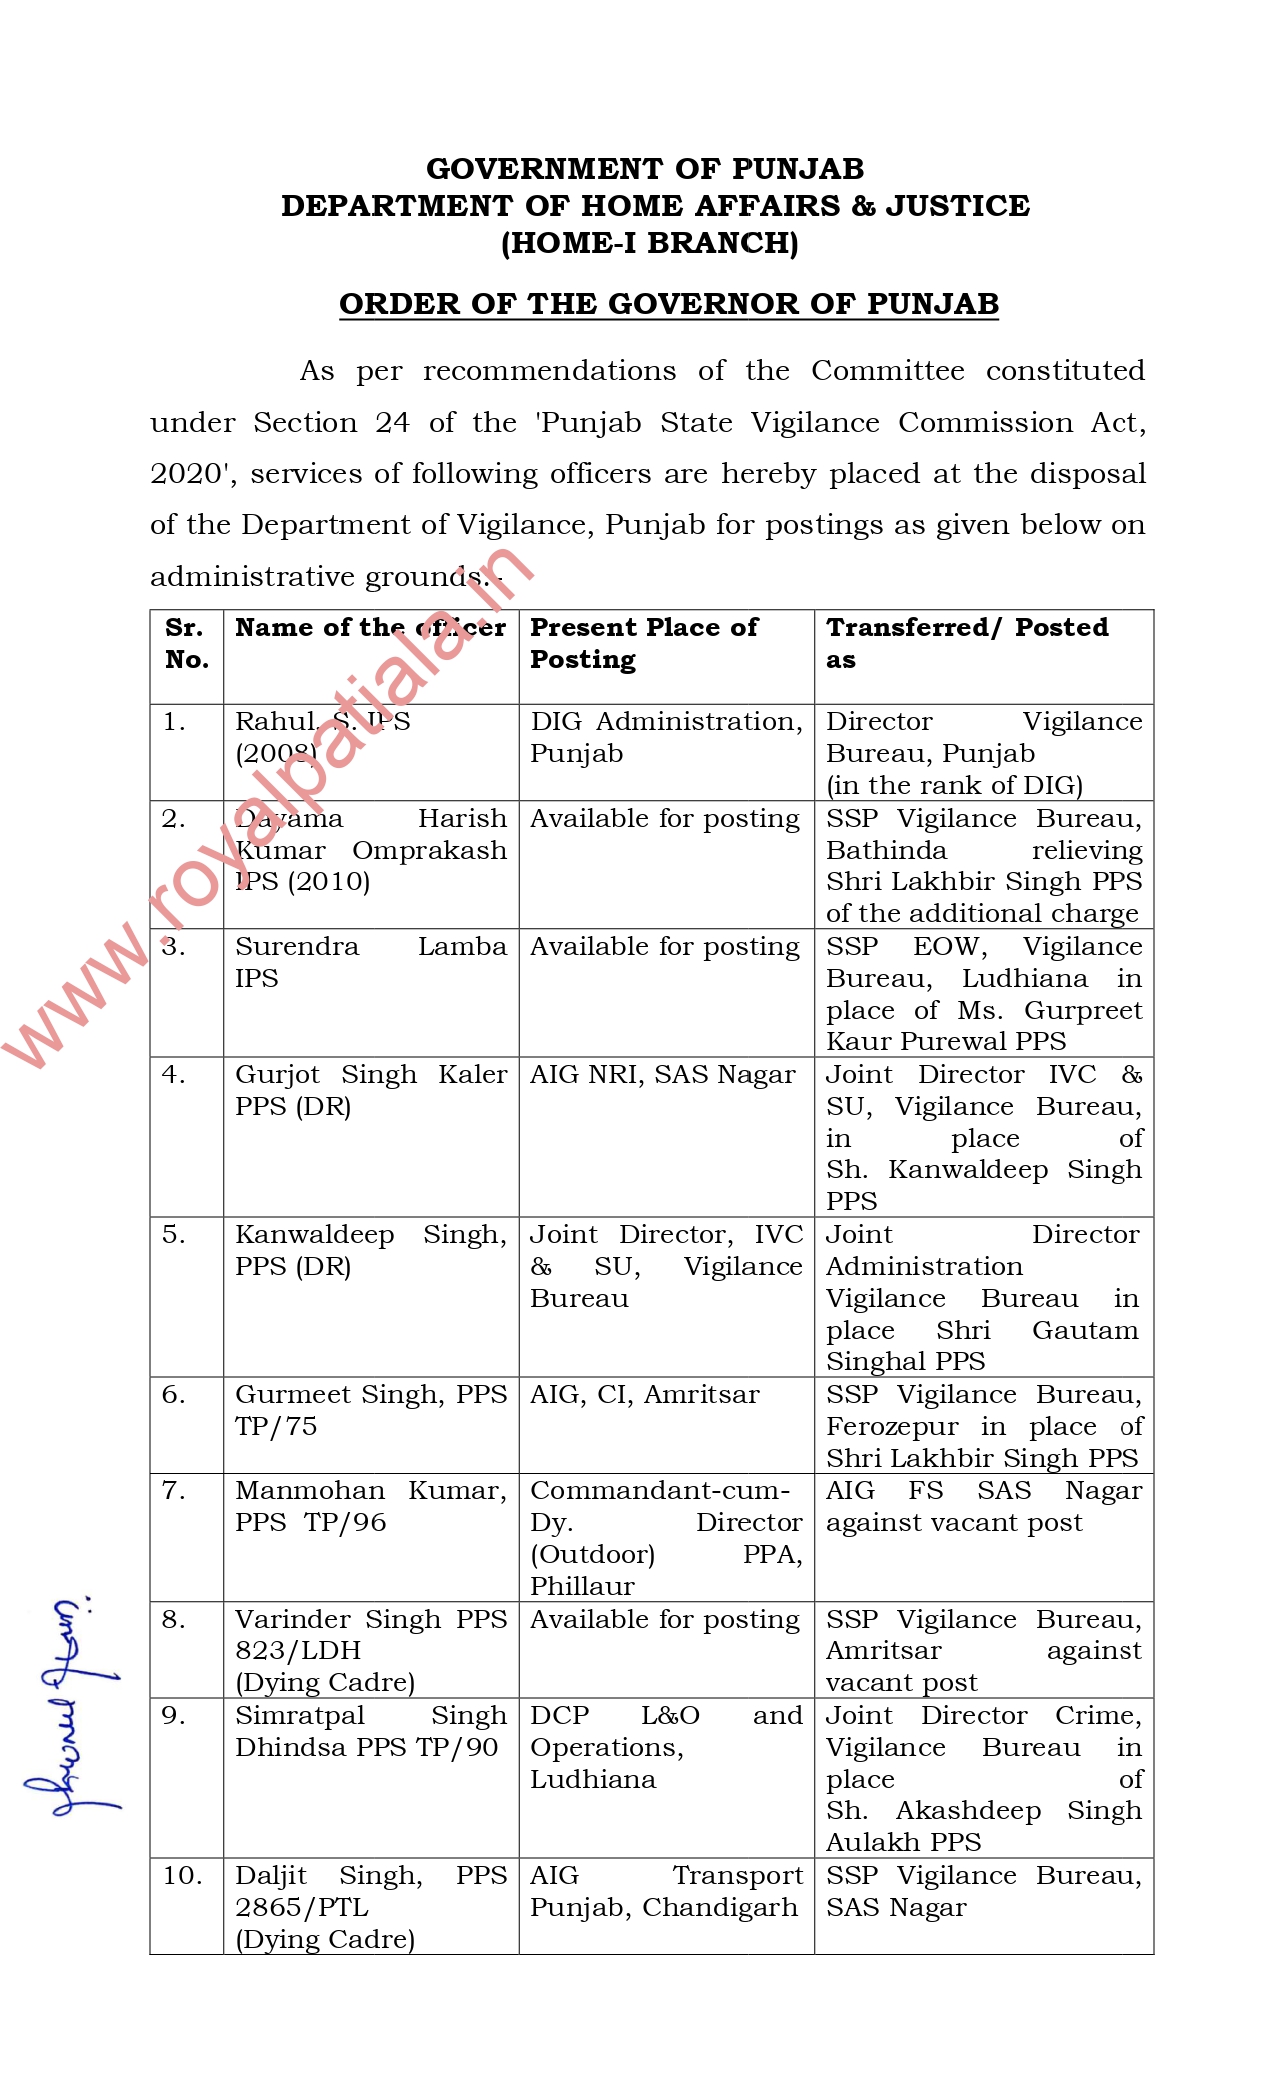 Punjab Vigilance Bureau transfers-10 IPS,PPS transferred